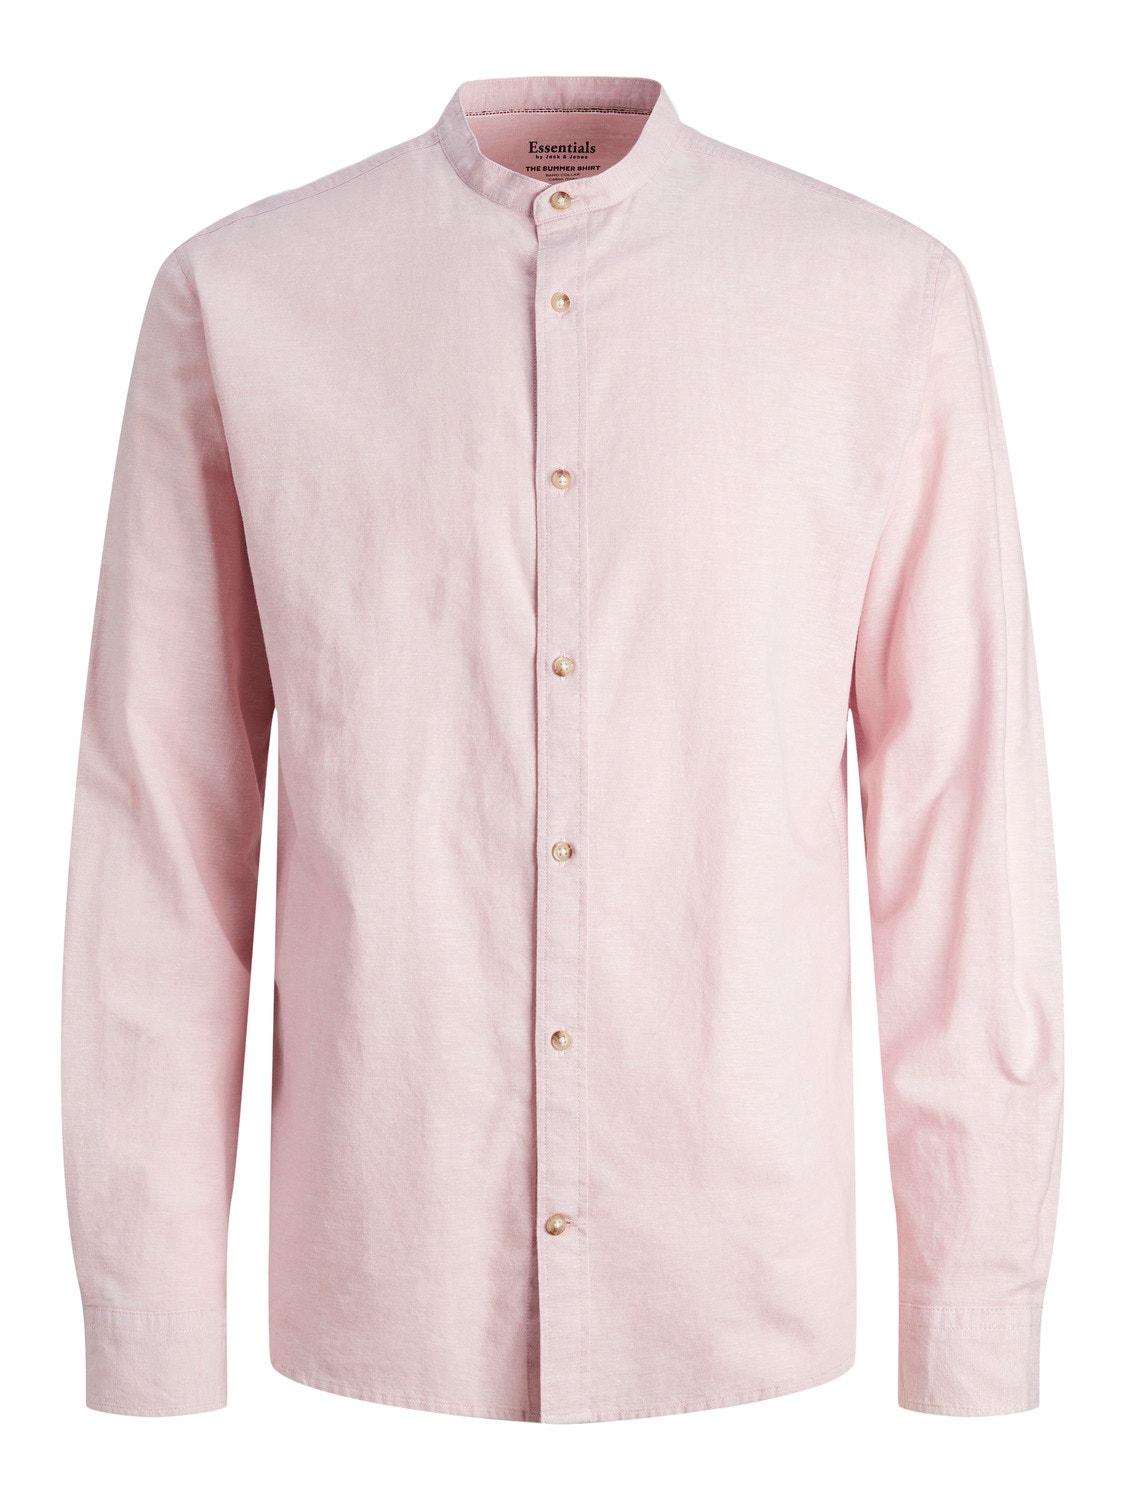 Jack & Jones Camisa Comfort Fit -Pink Nectar - 12248385